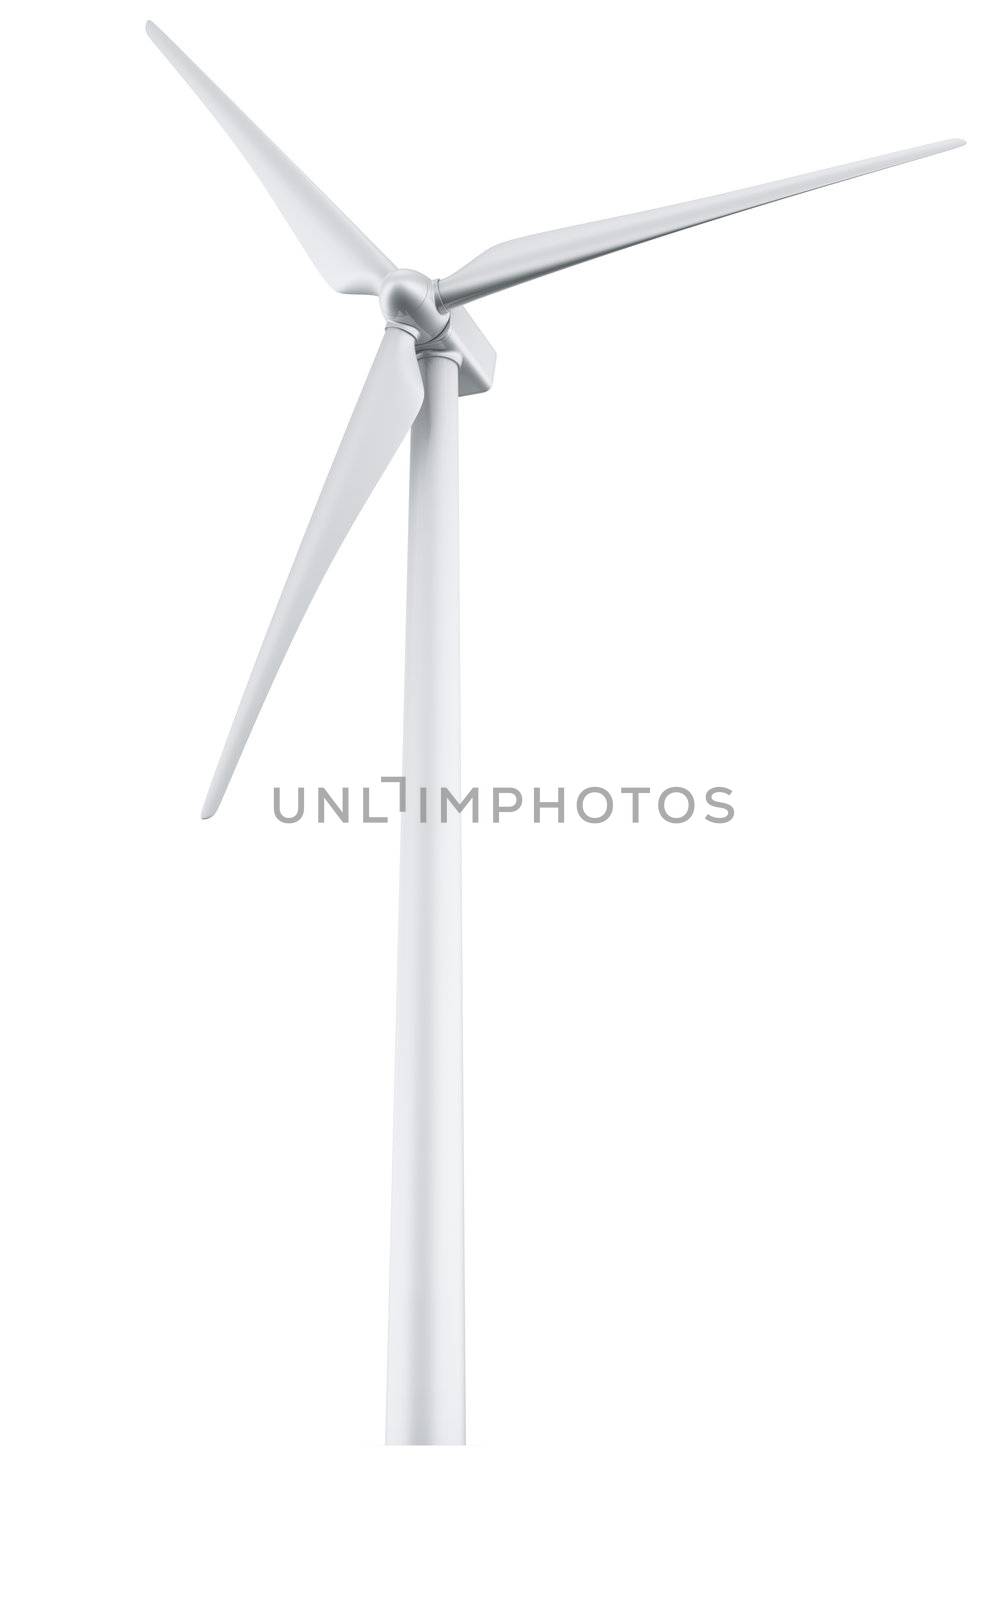 3d rendering of a single wind turbine in a wite studio setup